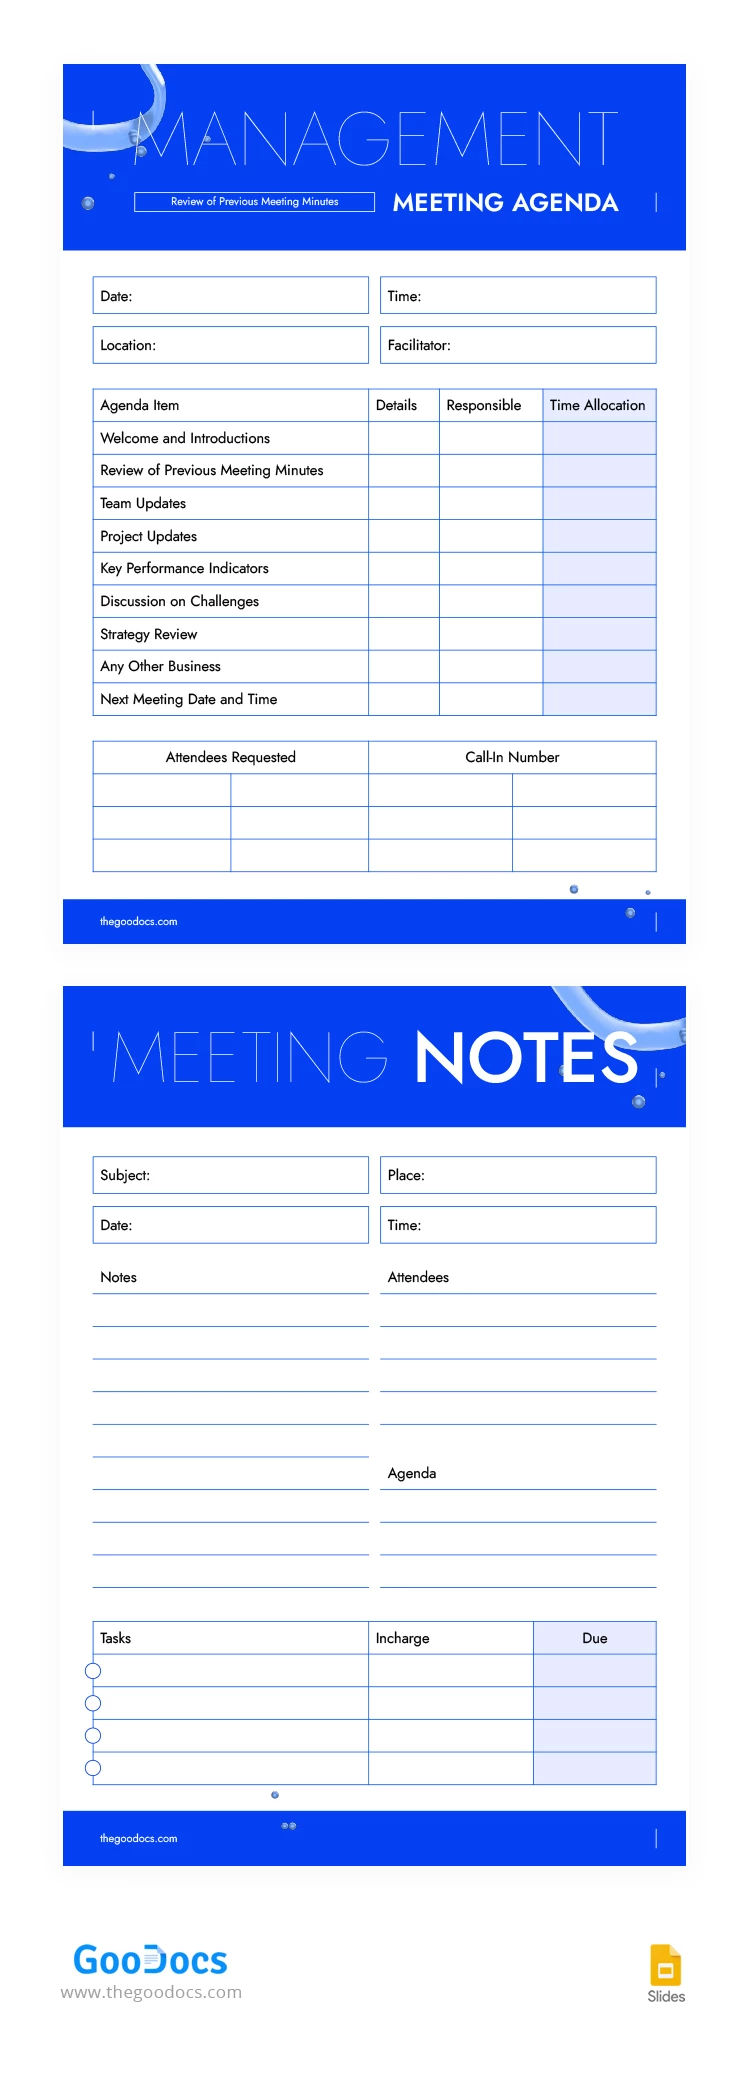 Moderne Management Meeting Agenda - free Google Docs Template - 10068319